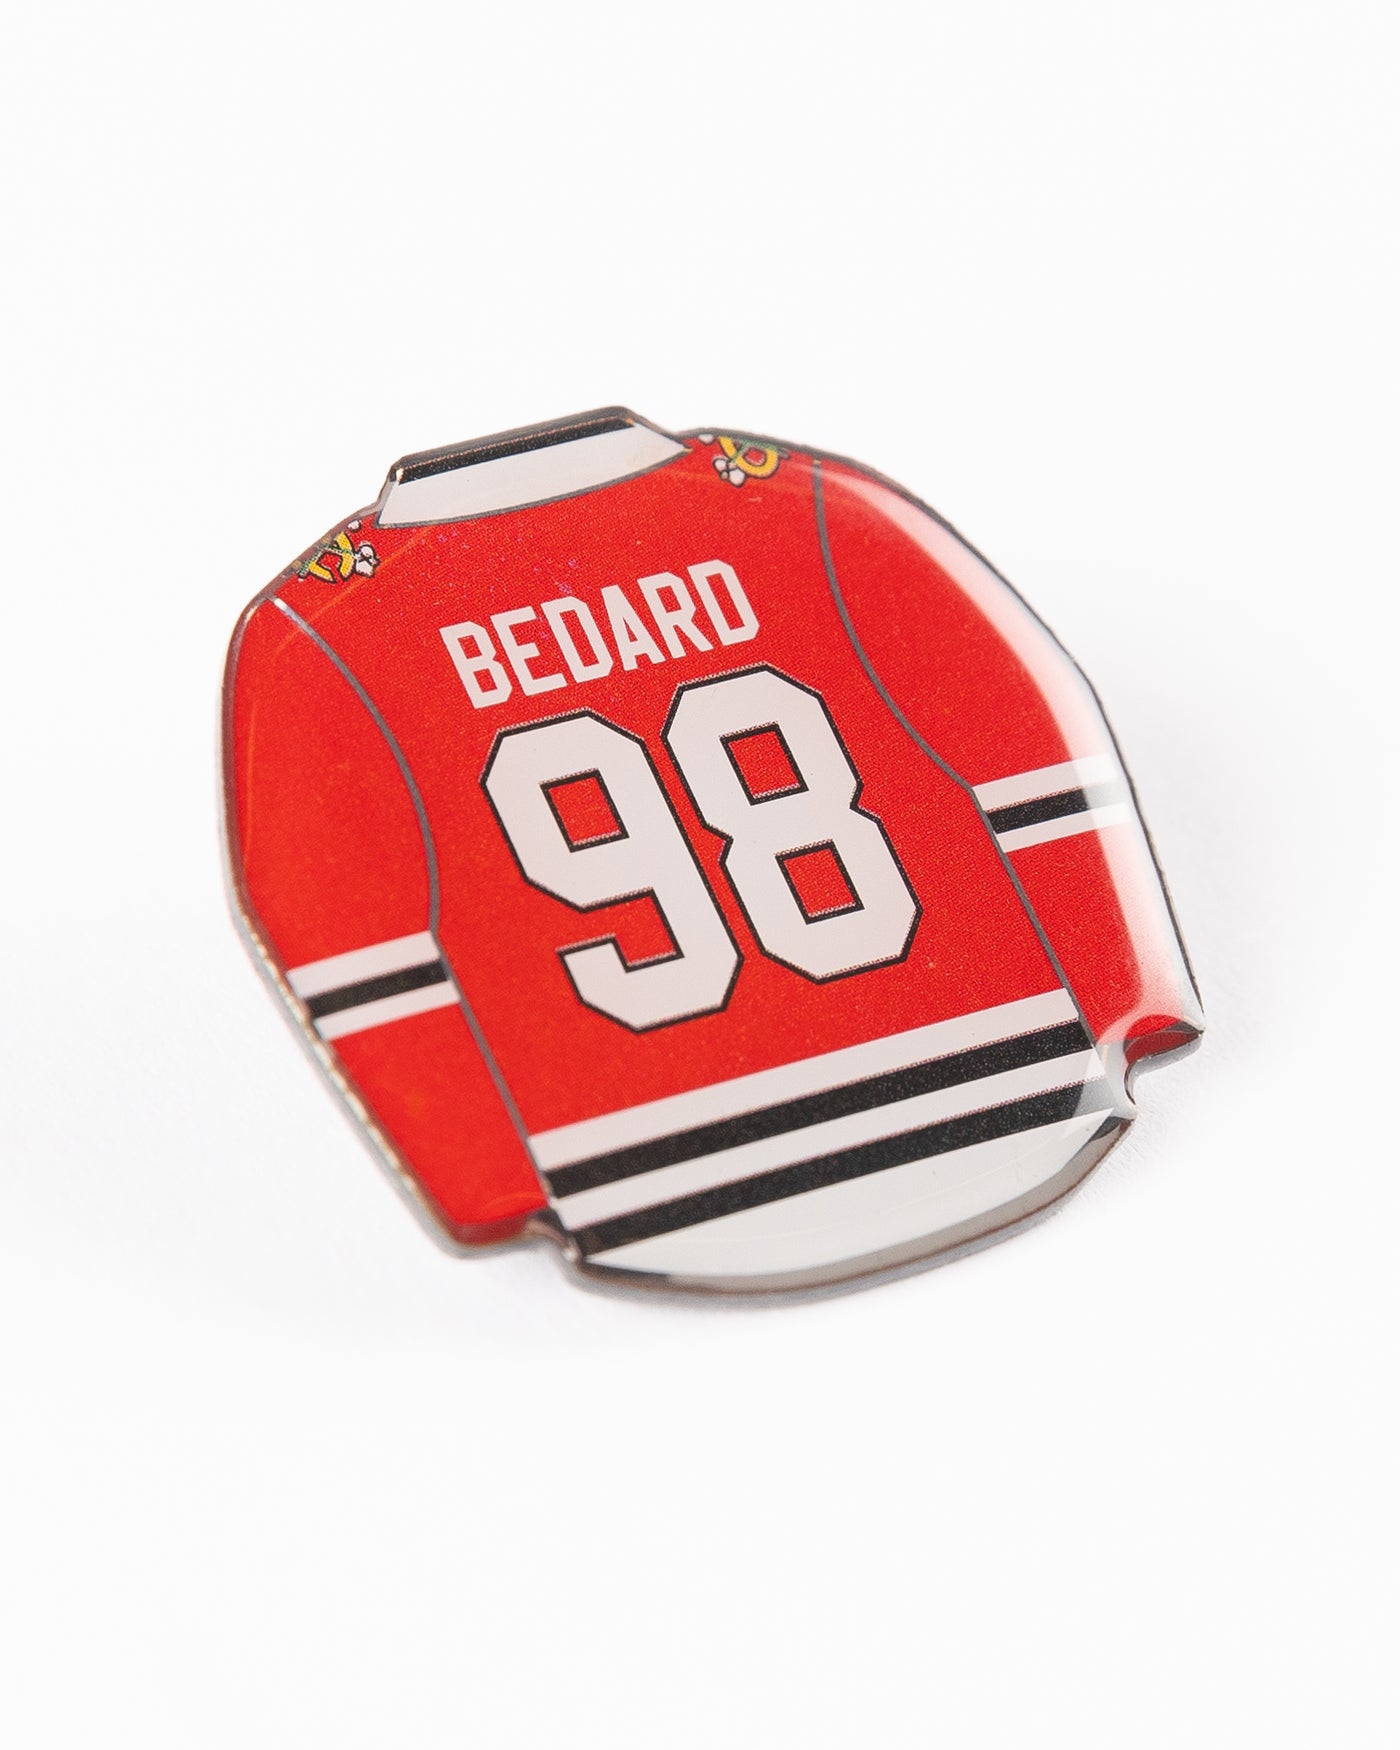 Chicago Blackhawks Bedard Jersey Pin